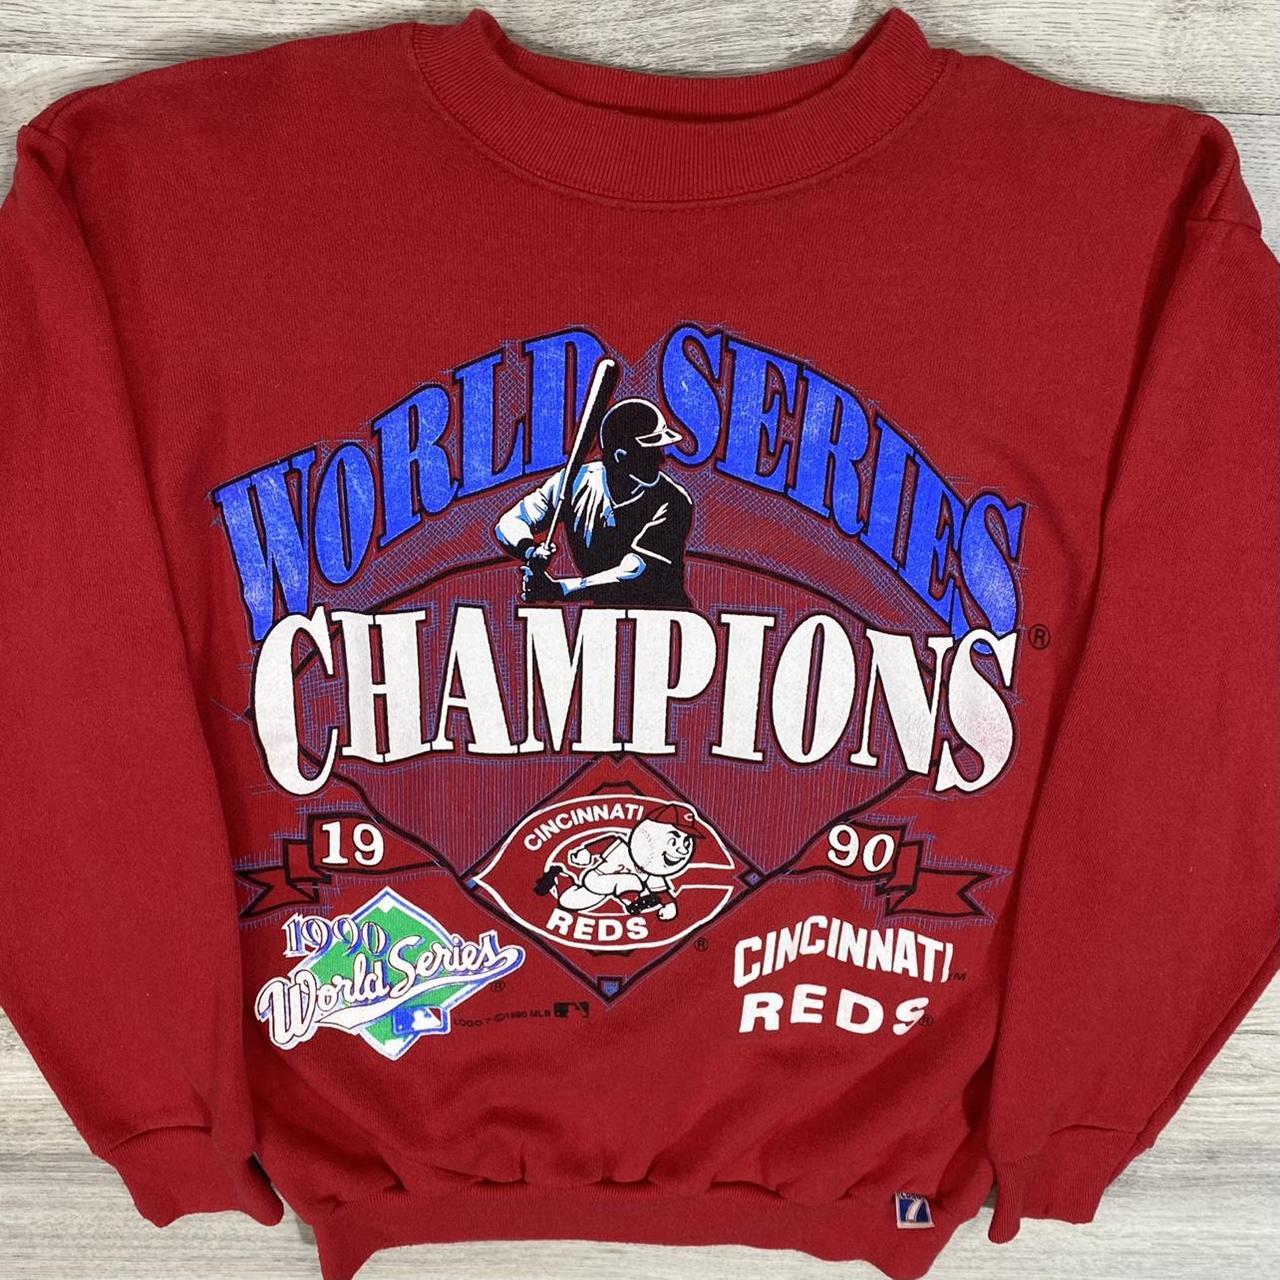 Vintage 1990 Cincinnati Reds World Series champions - Depop